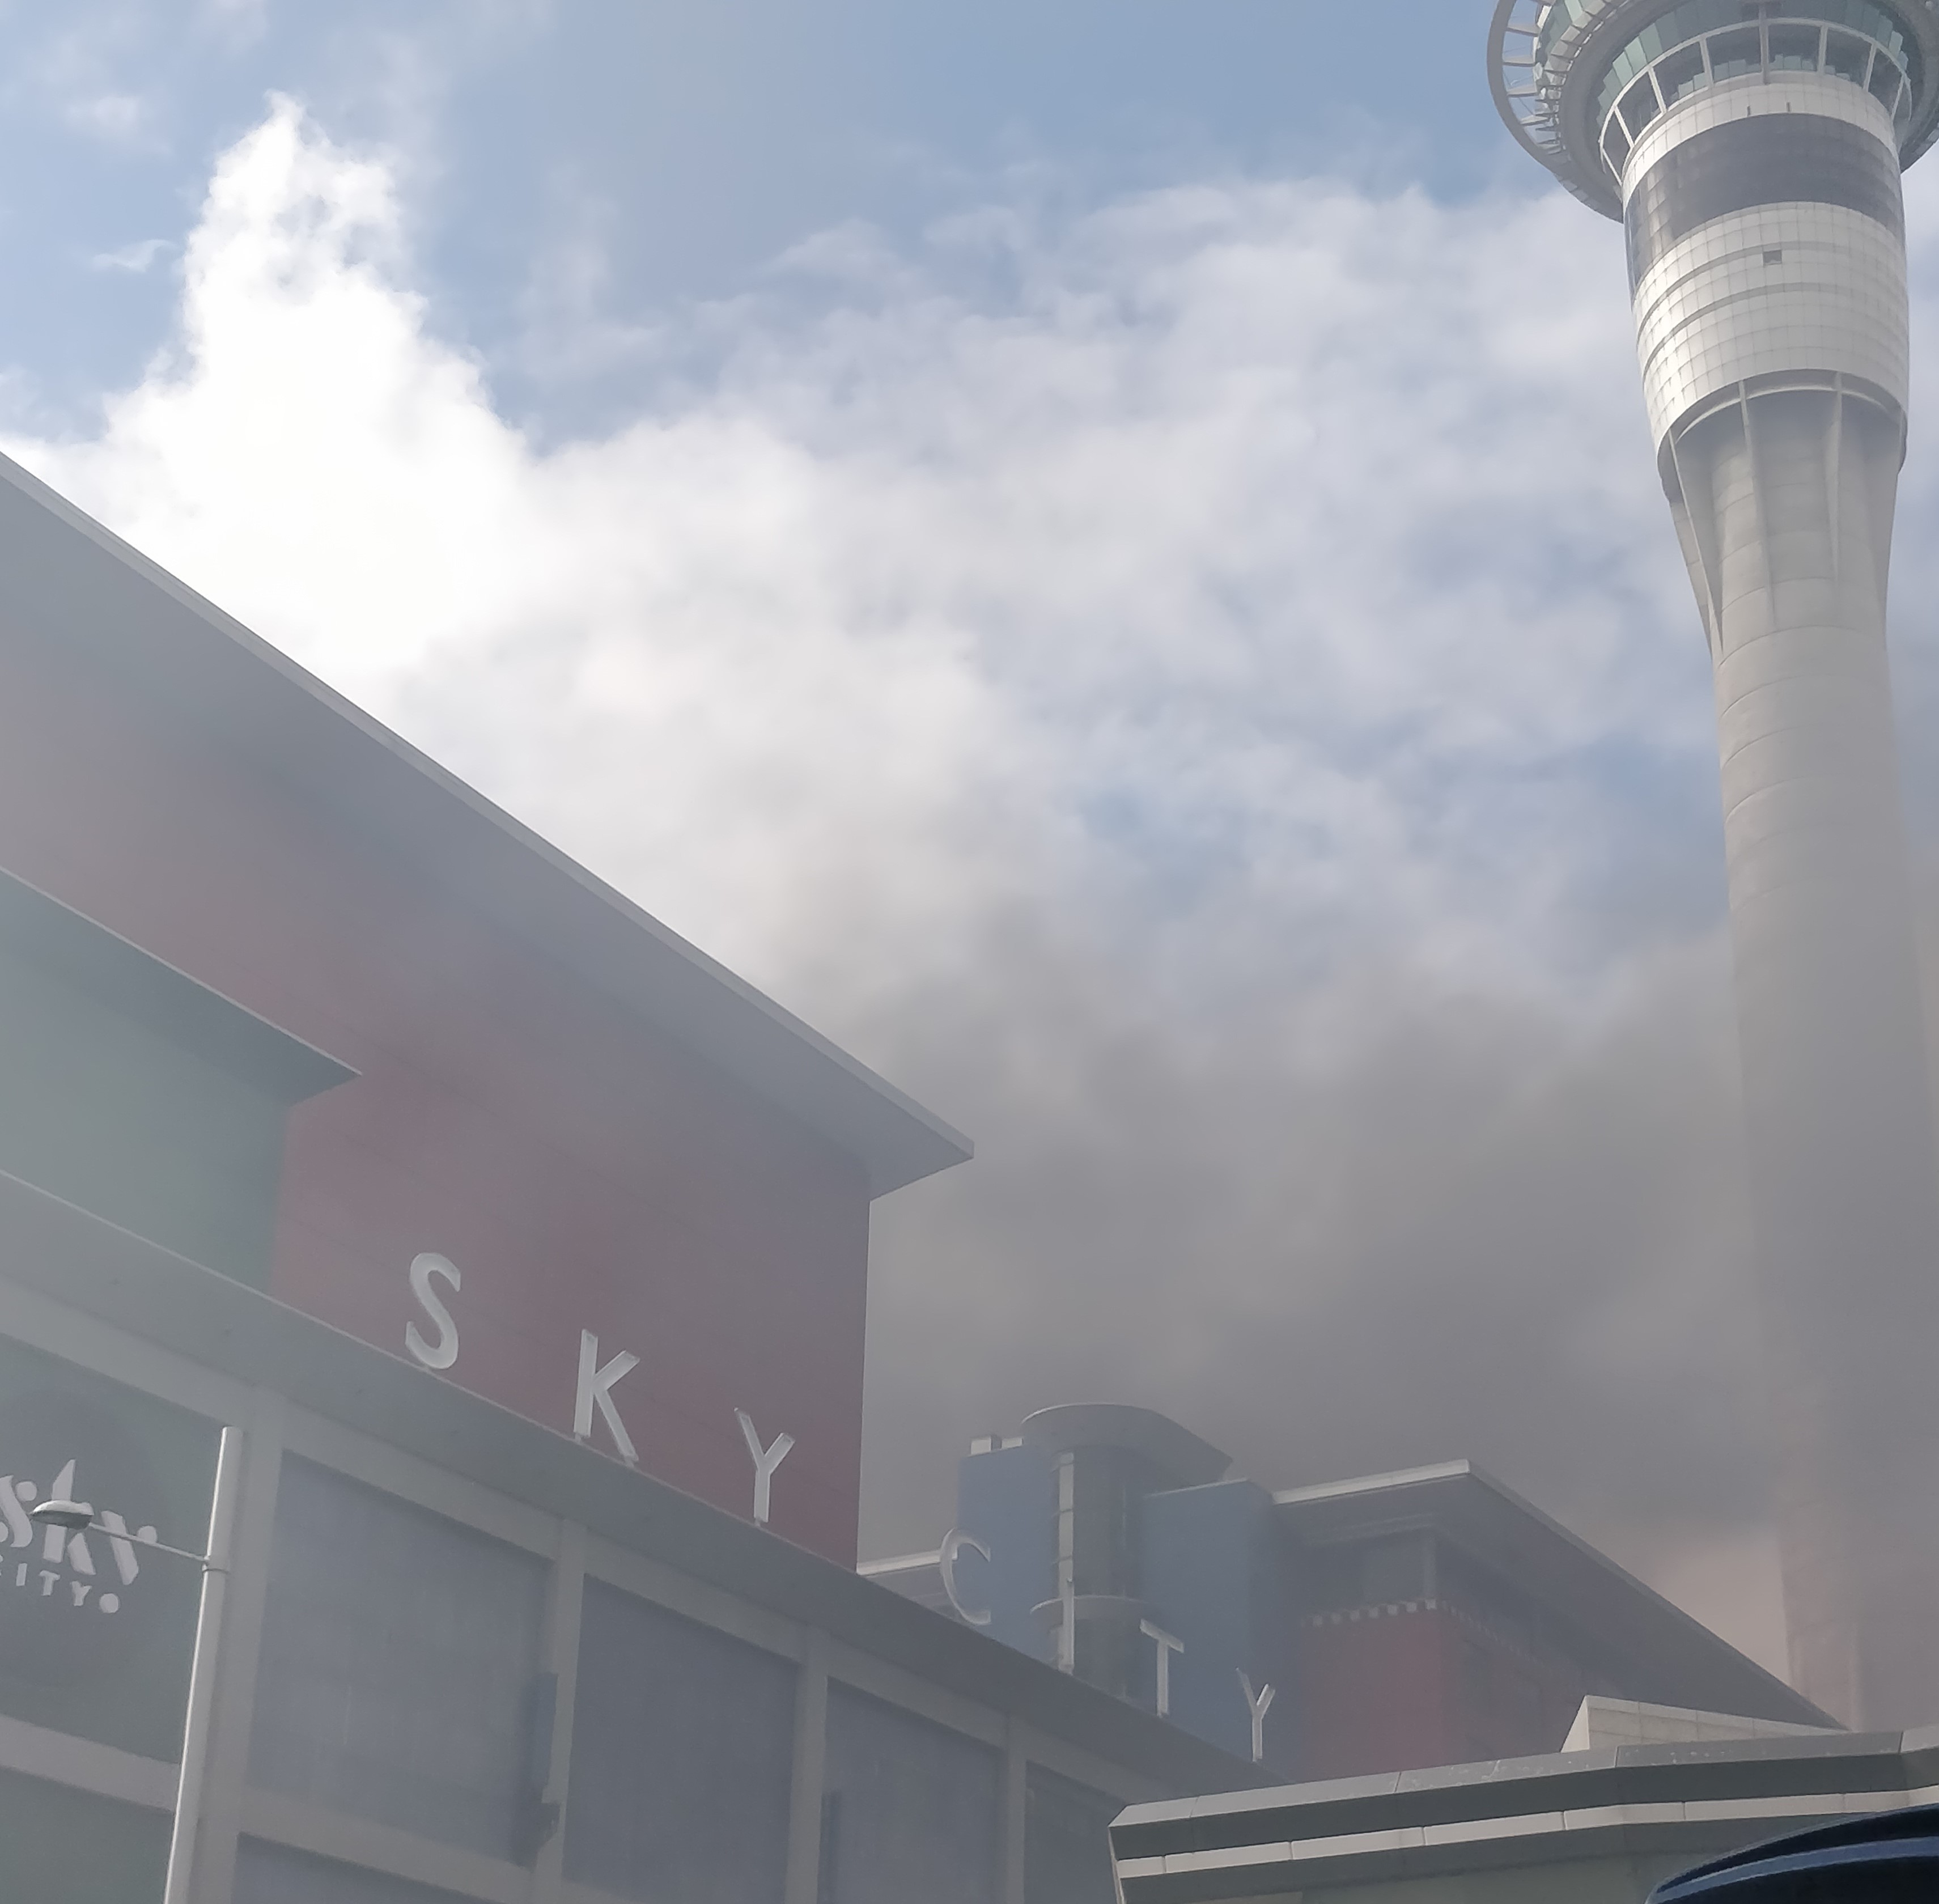 SkyCity convention centre damages dispute murkier after fire